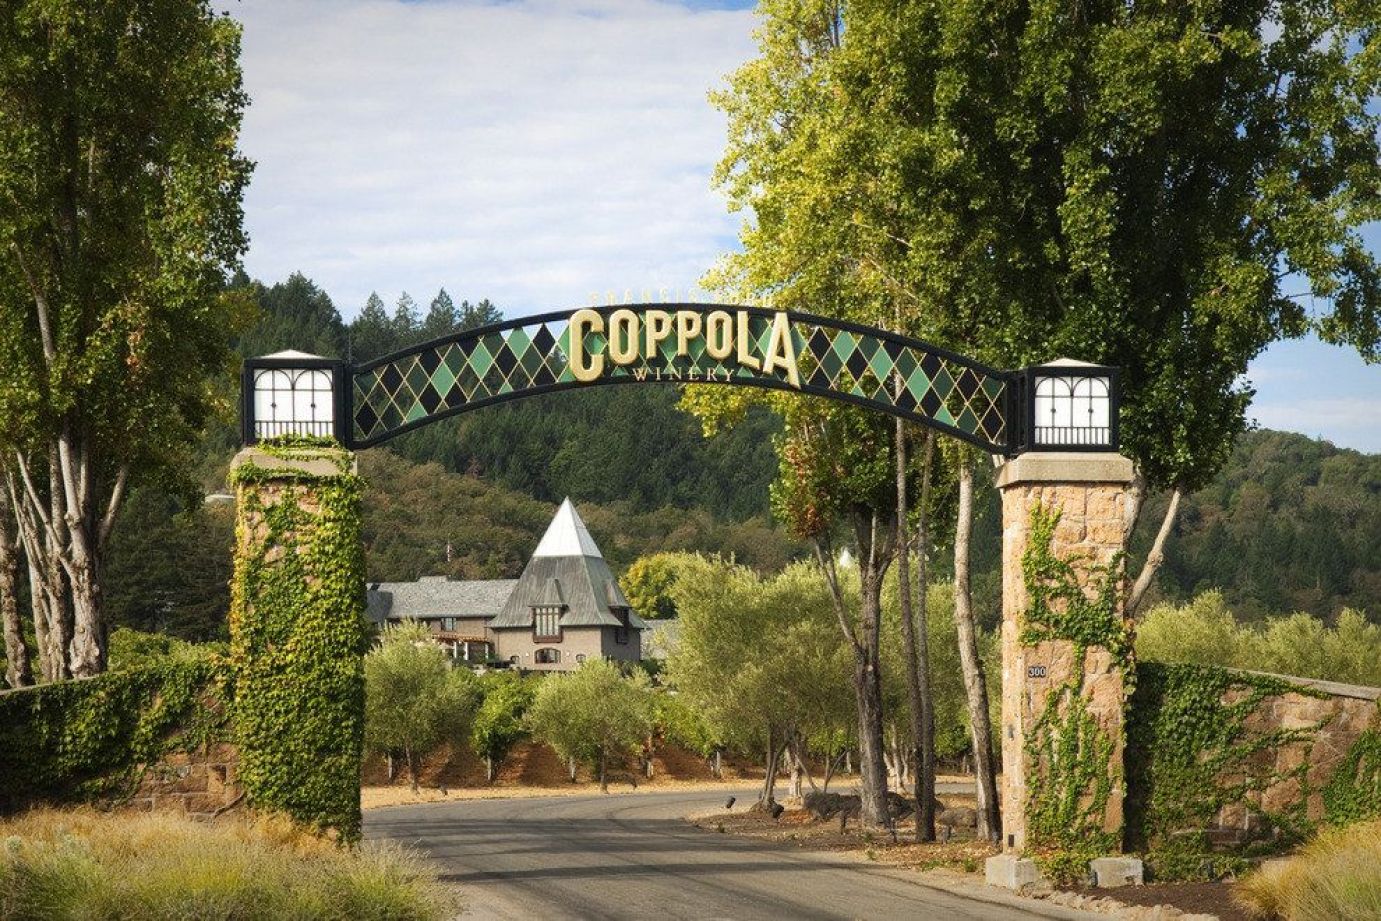 Entrance to Coppola Winery